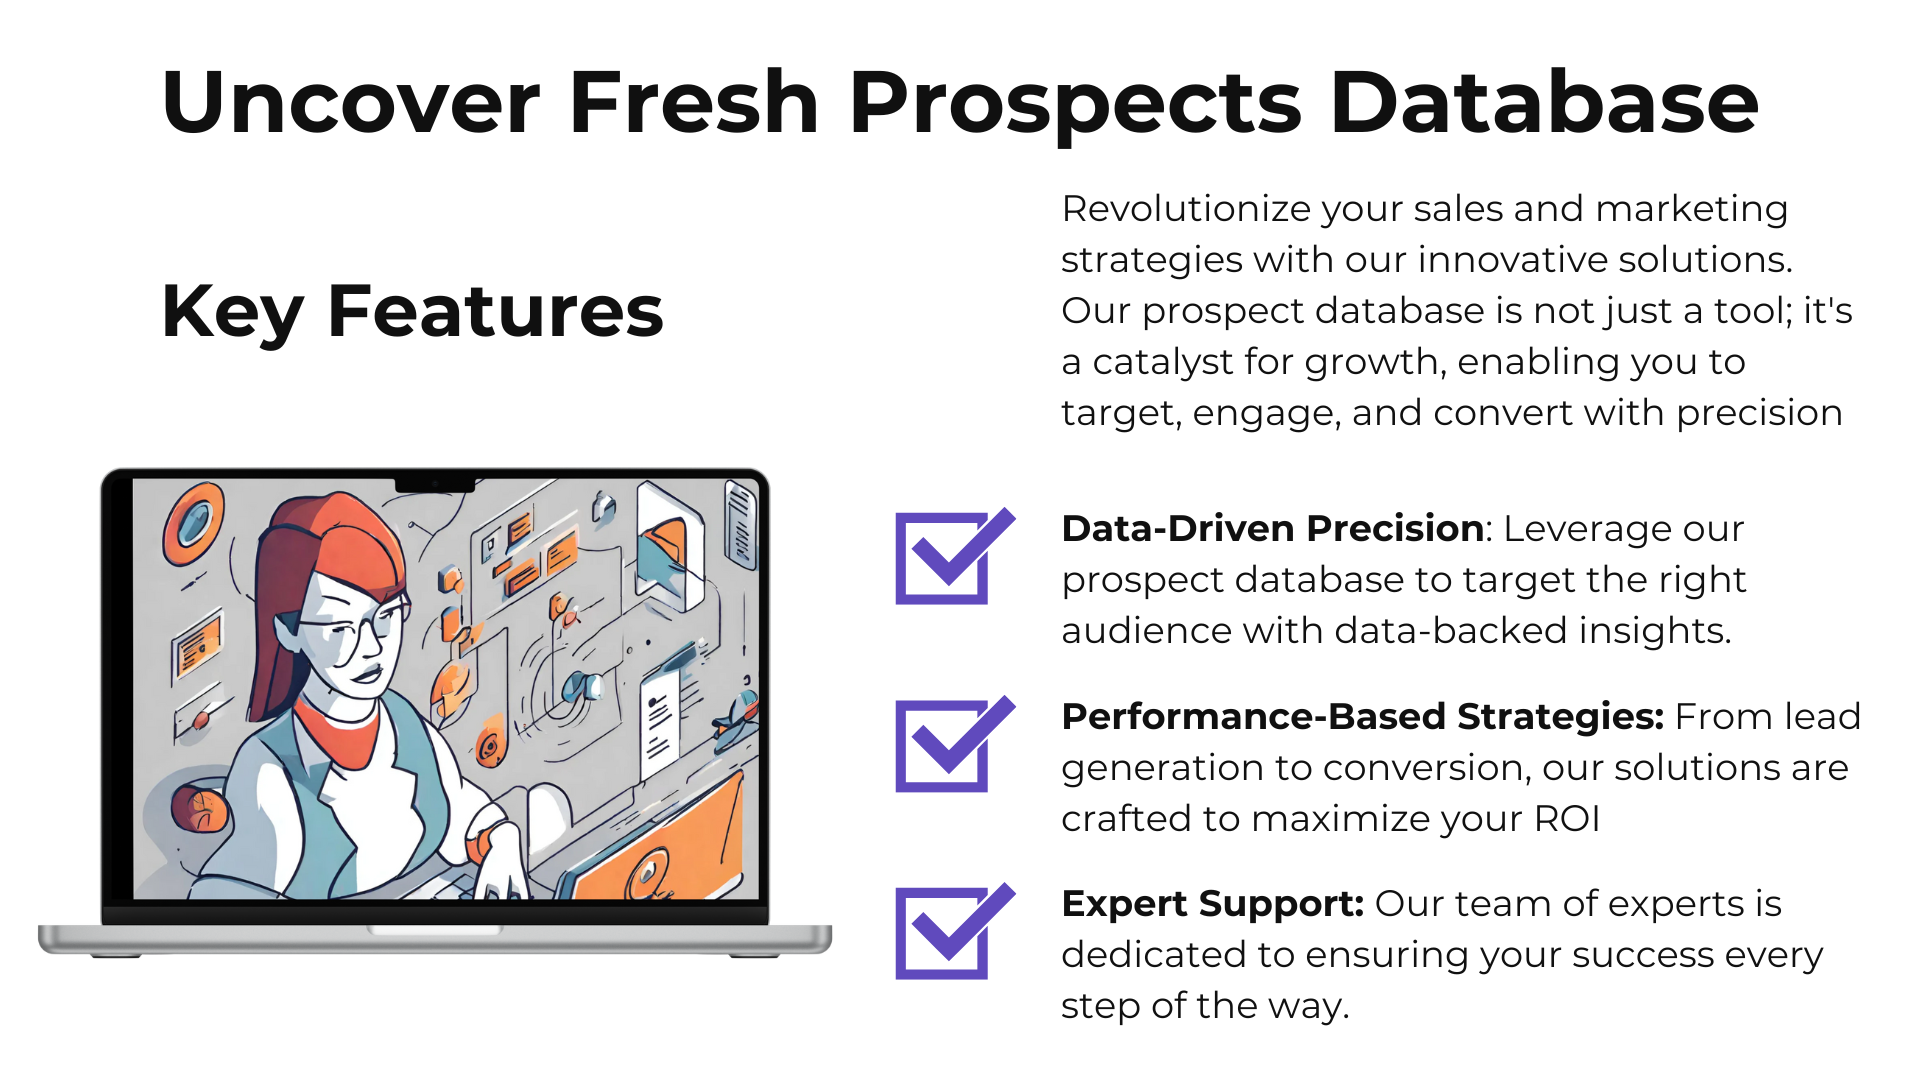 Uncover Fresh Prospects Database